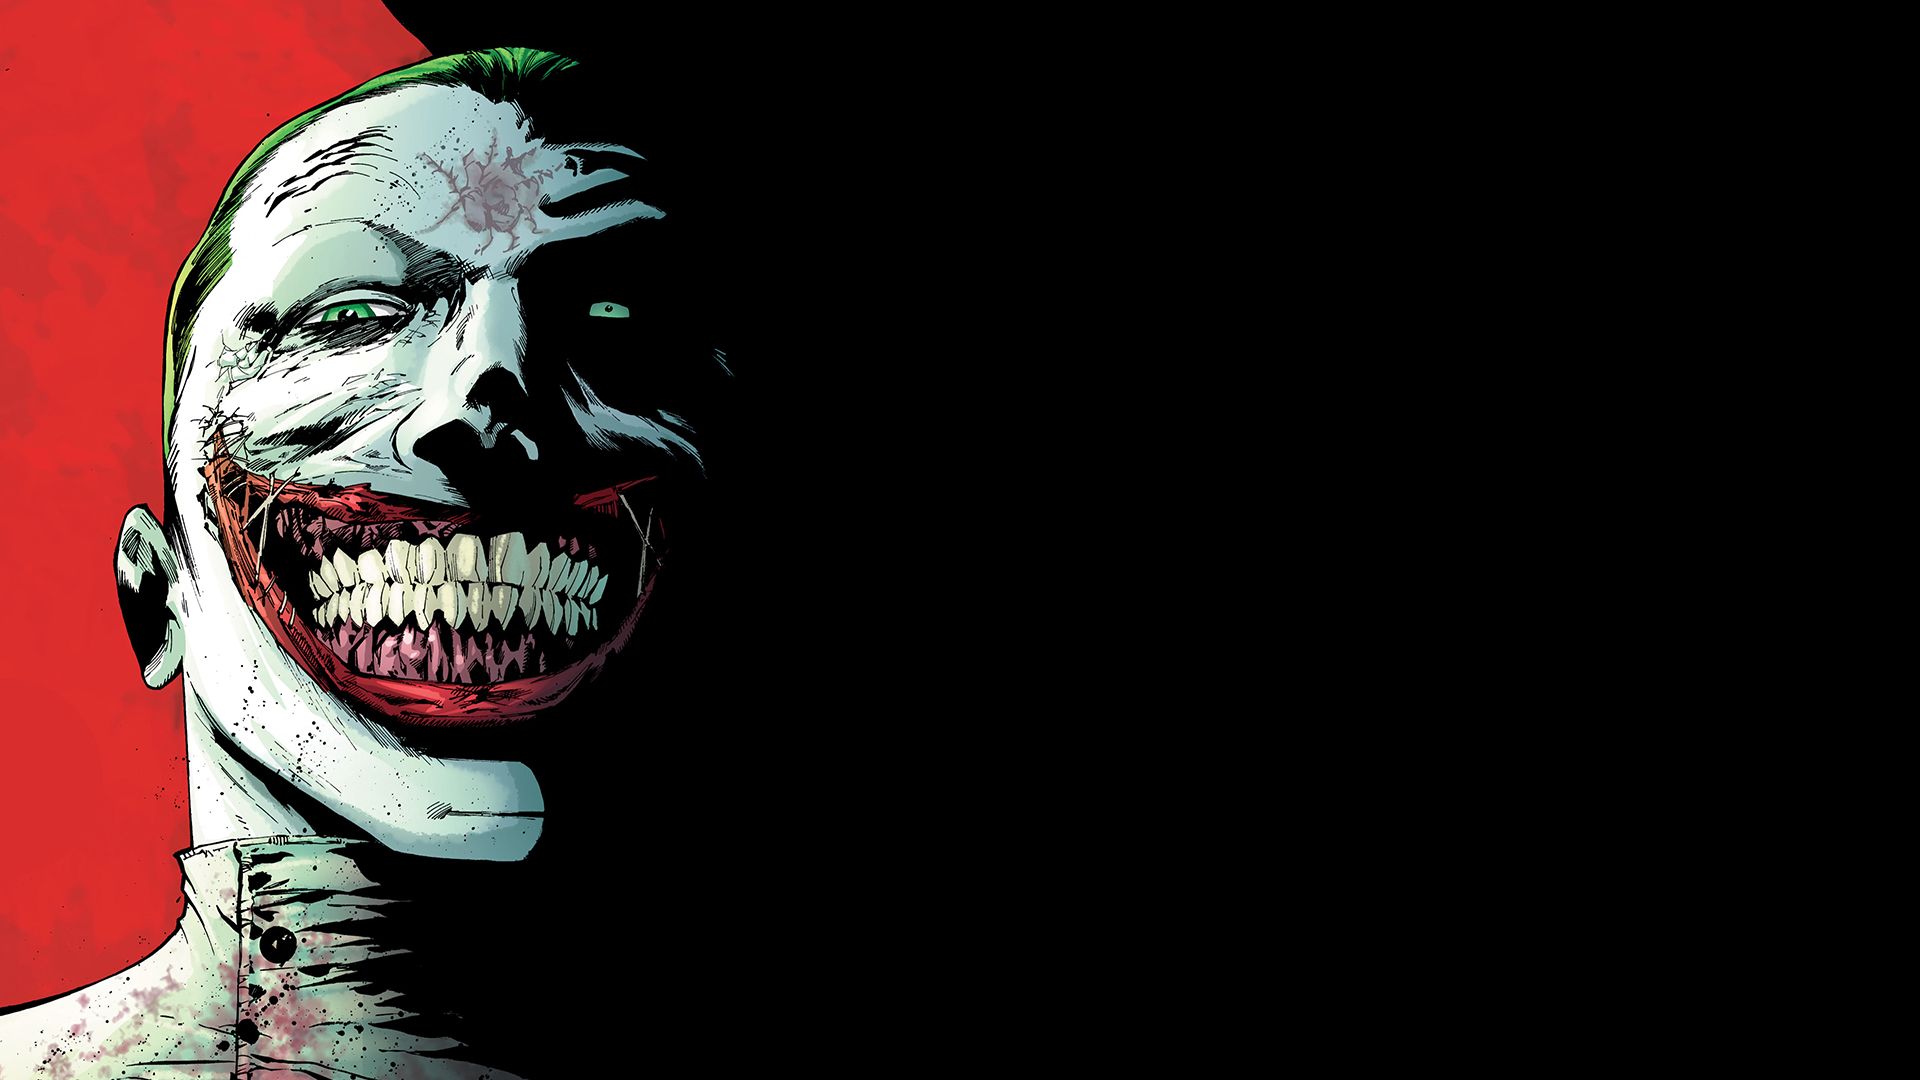 Joker DC Comic Wallpaper, HD Superheroes 4K Wallpaper, Image, Photo and Background